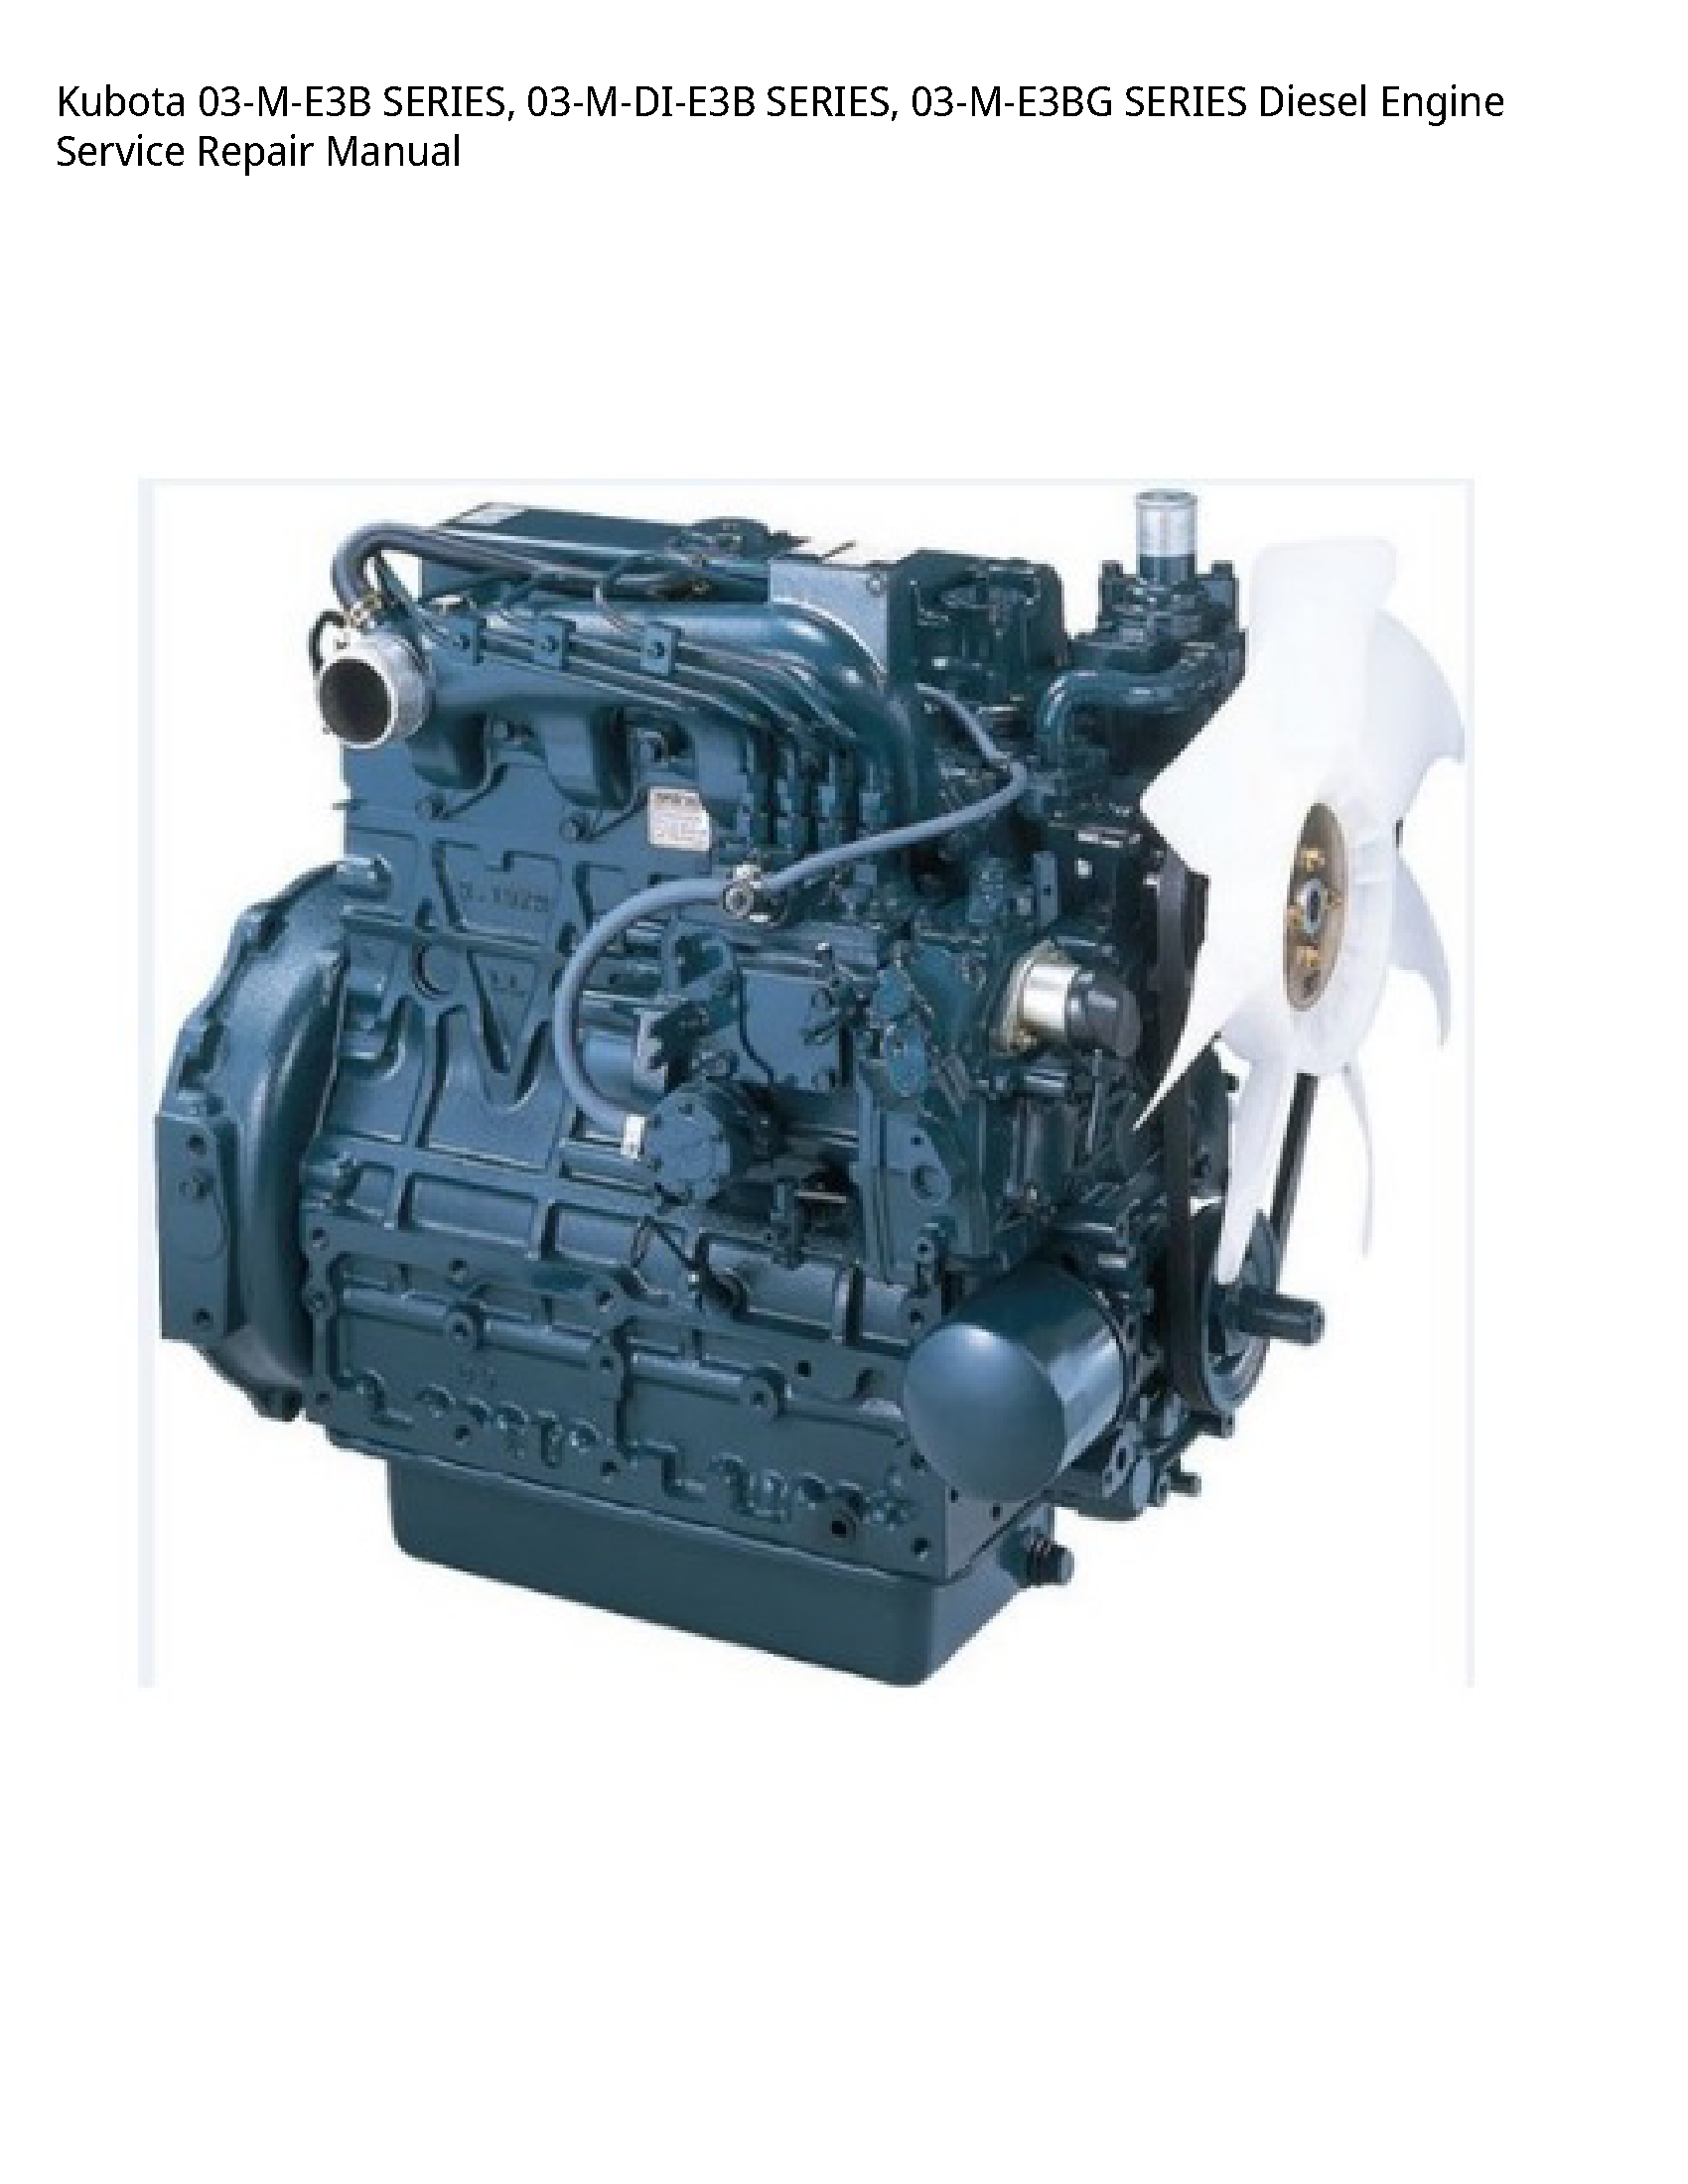 Kubota 03-M-E3B SERIES  03-M-DI-E3B SERIES  03-M-E3BG SERIES Diesel Engine Service Repair Manual